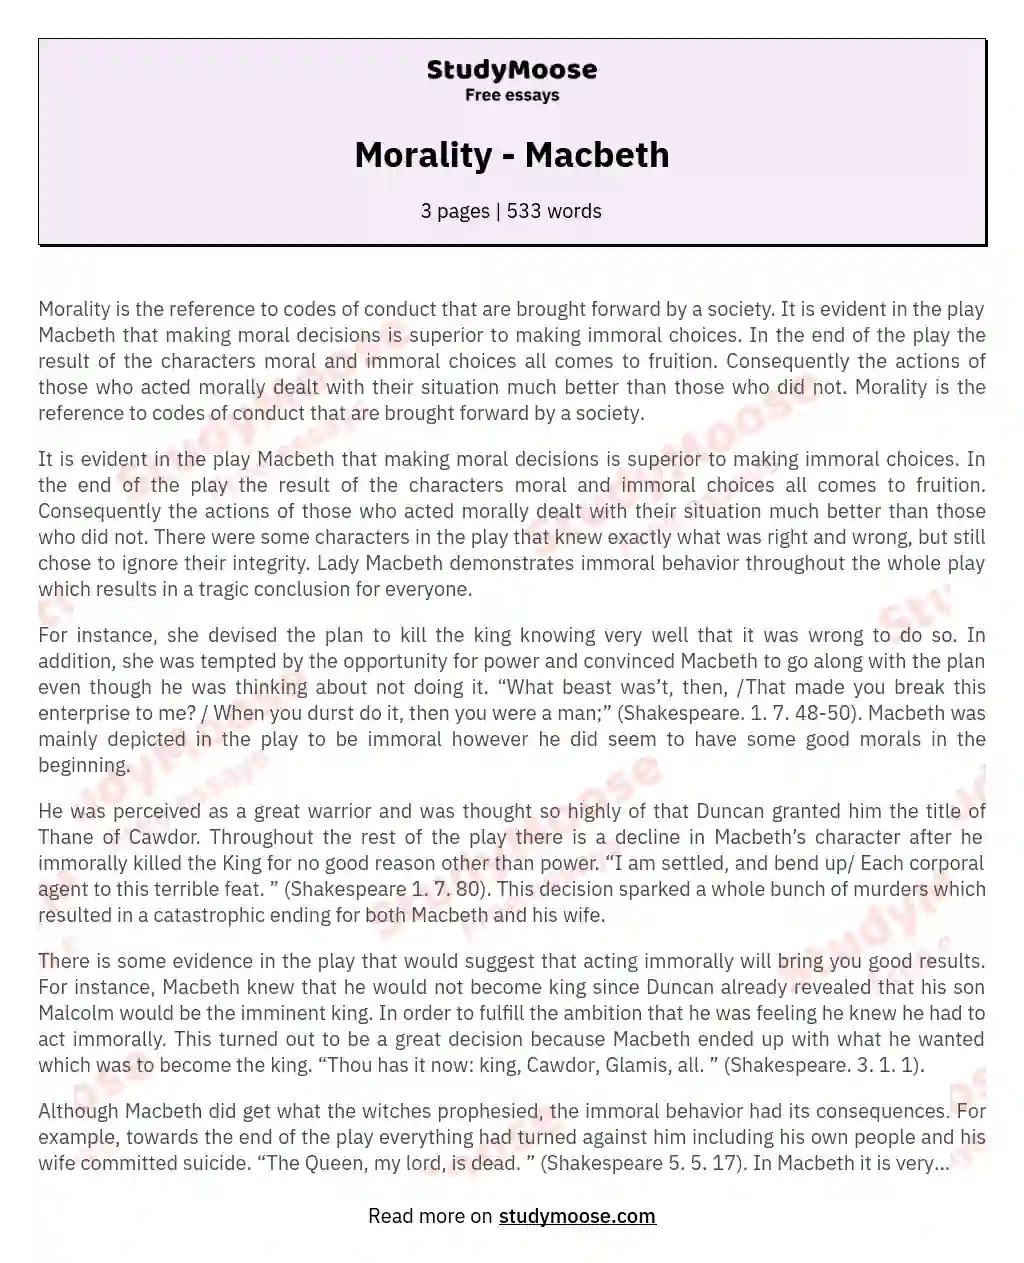 Morality - Macbeth essay